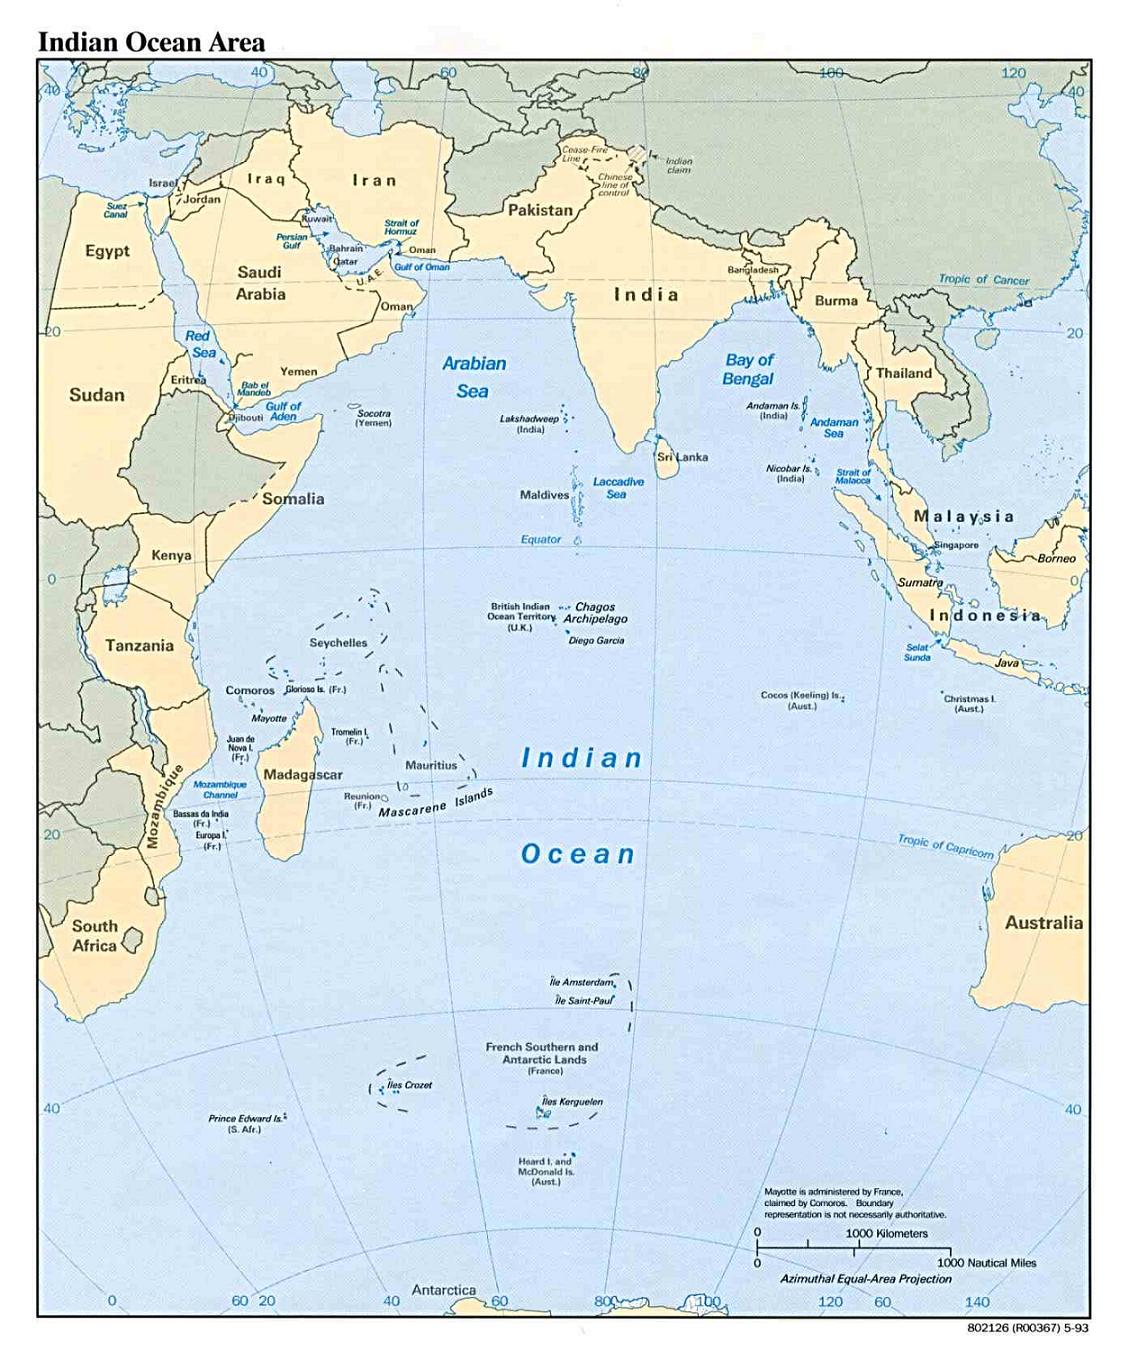 ocean indien